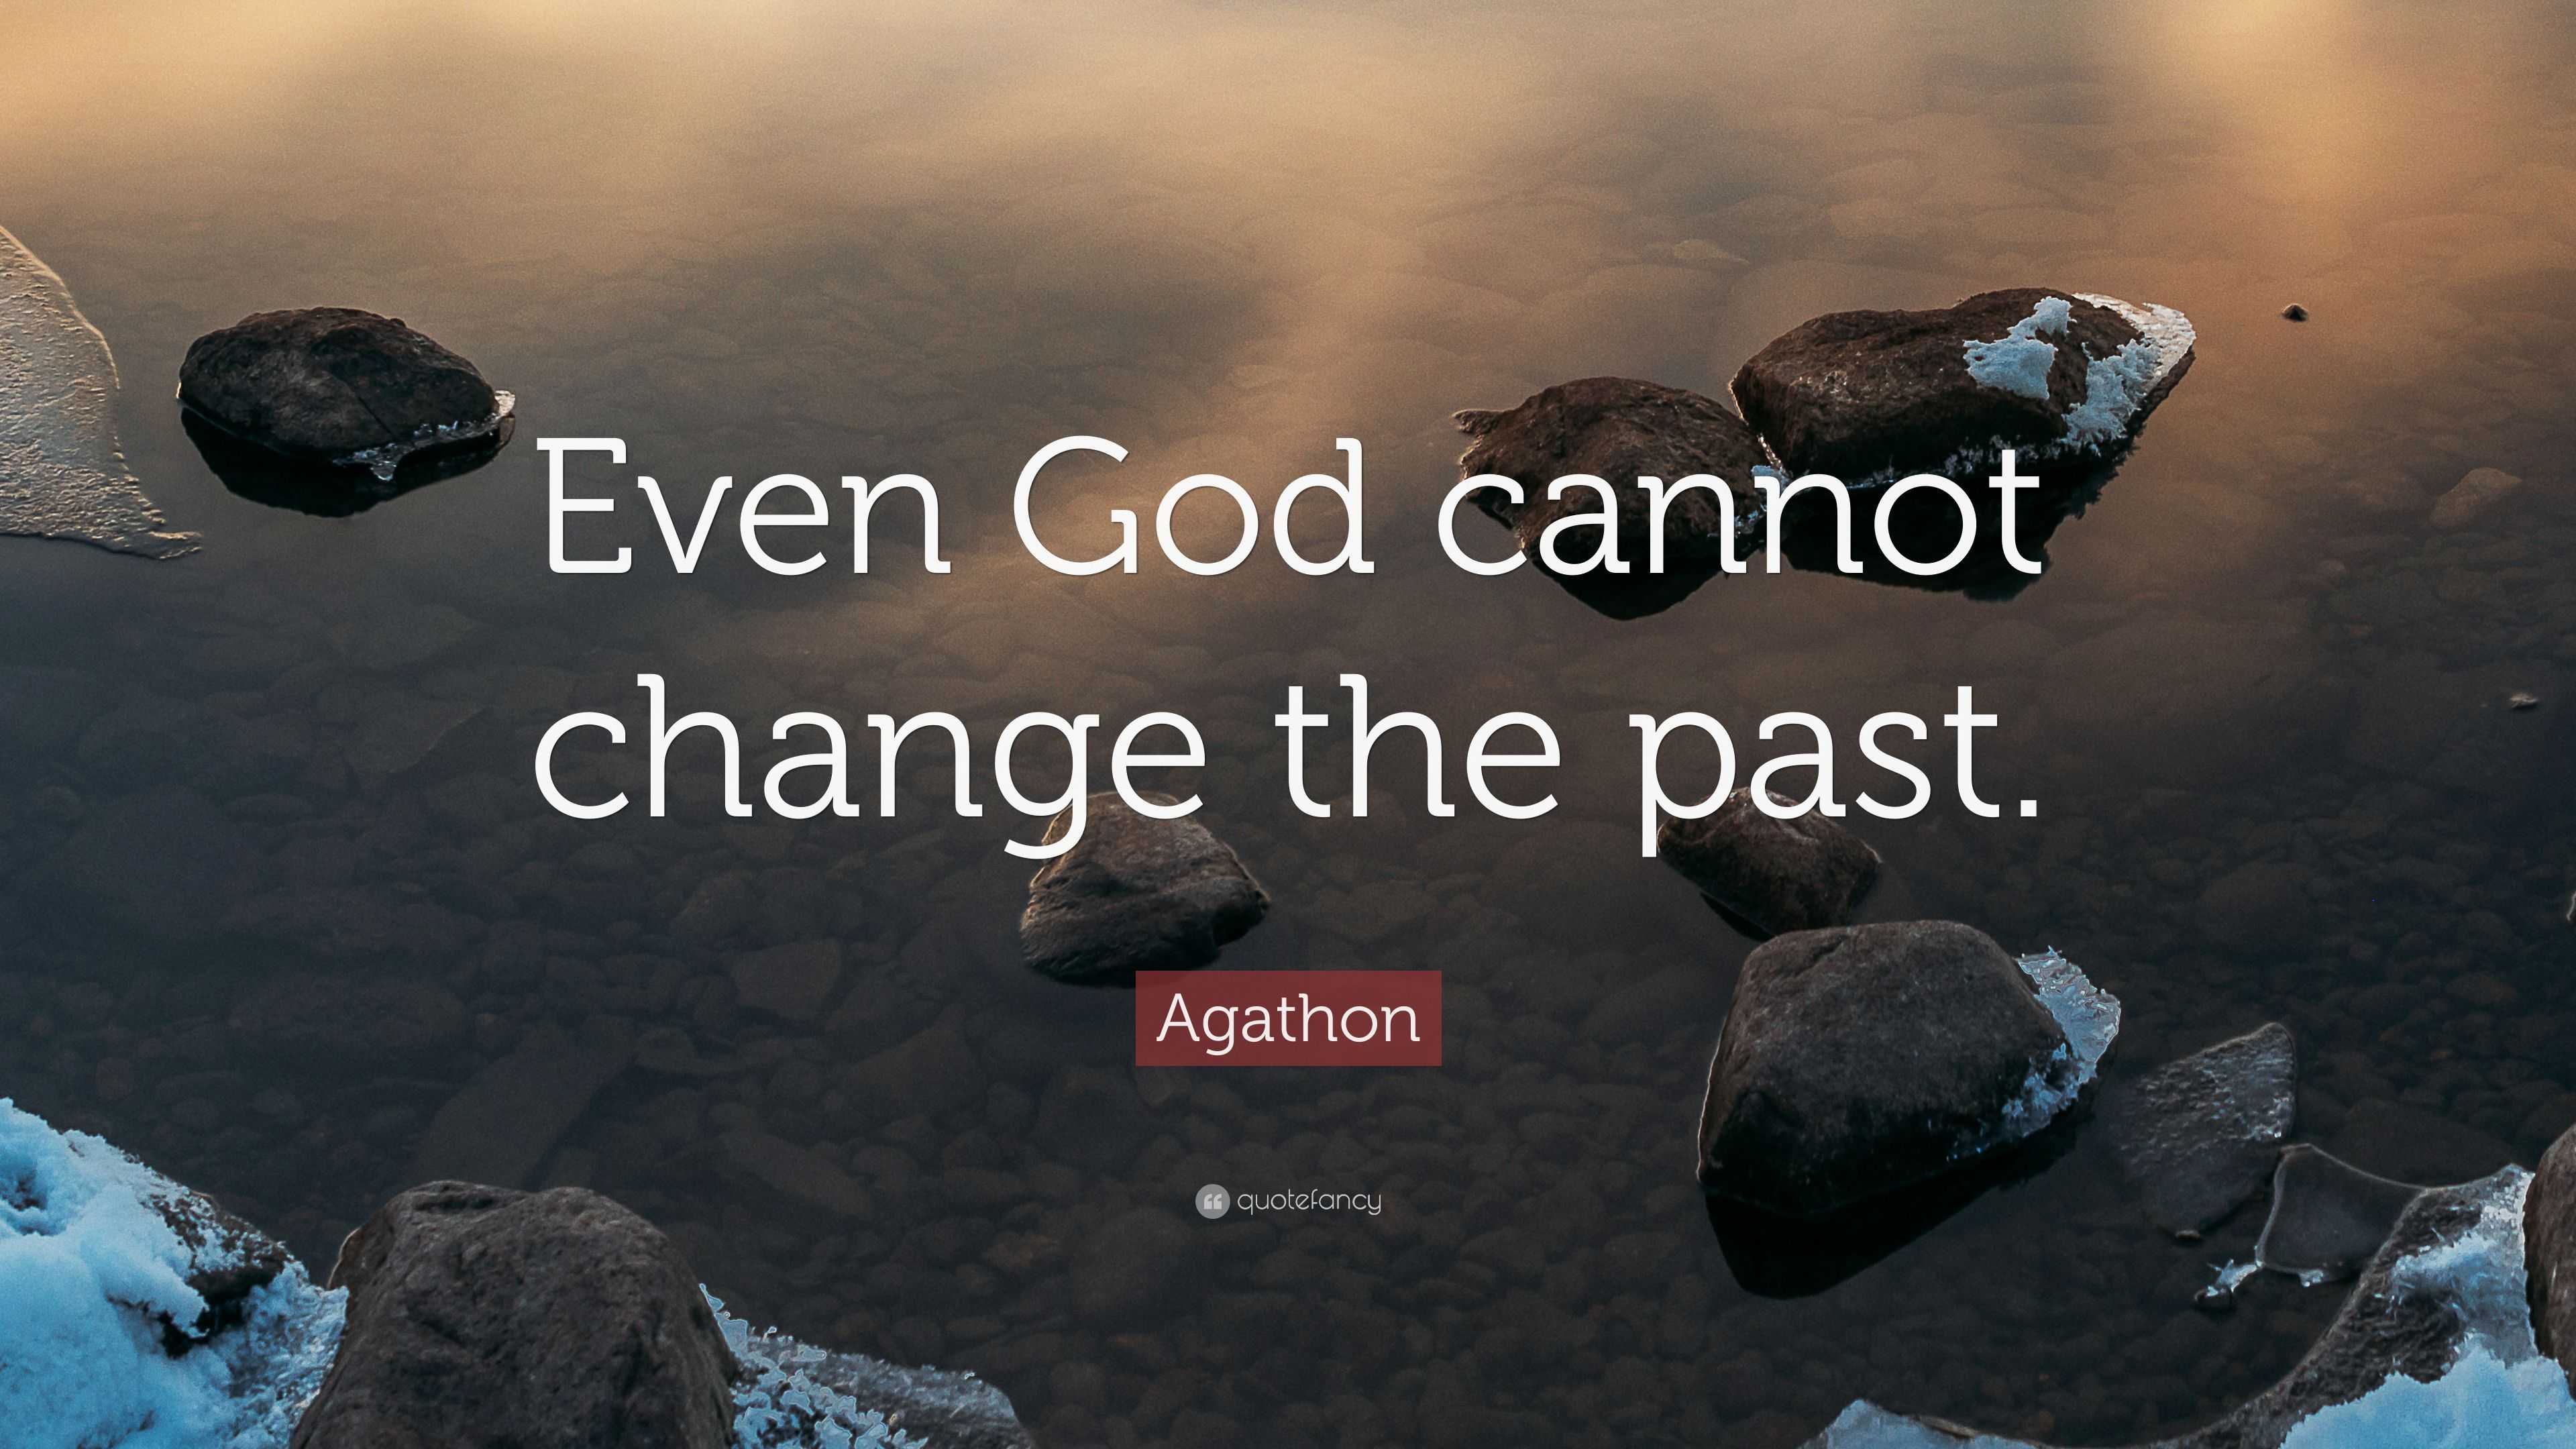 Agathon quote Even God cannot change the past